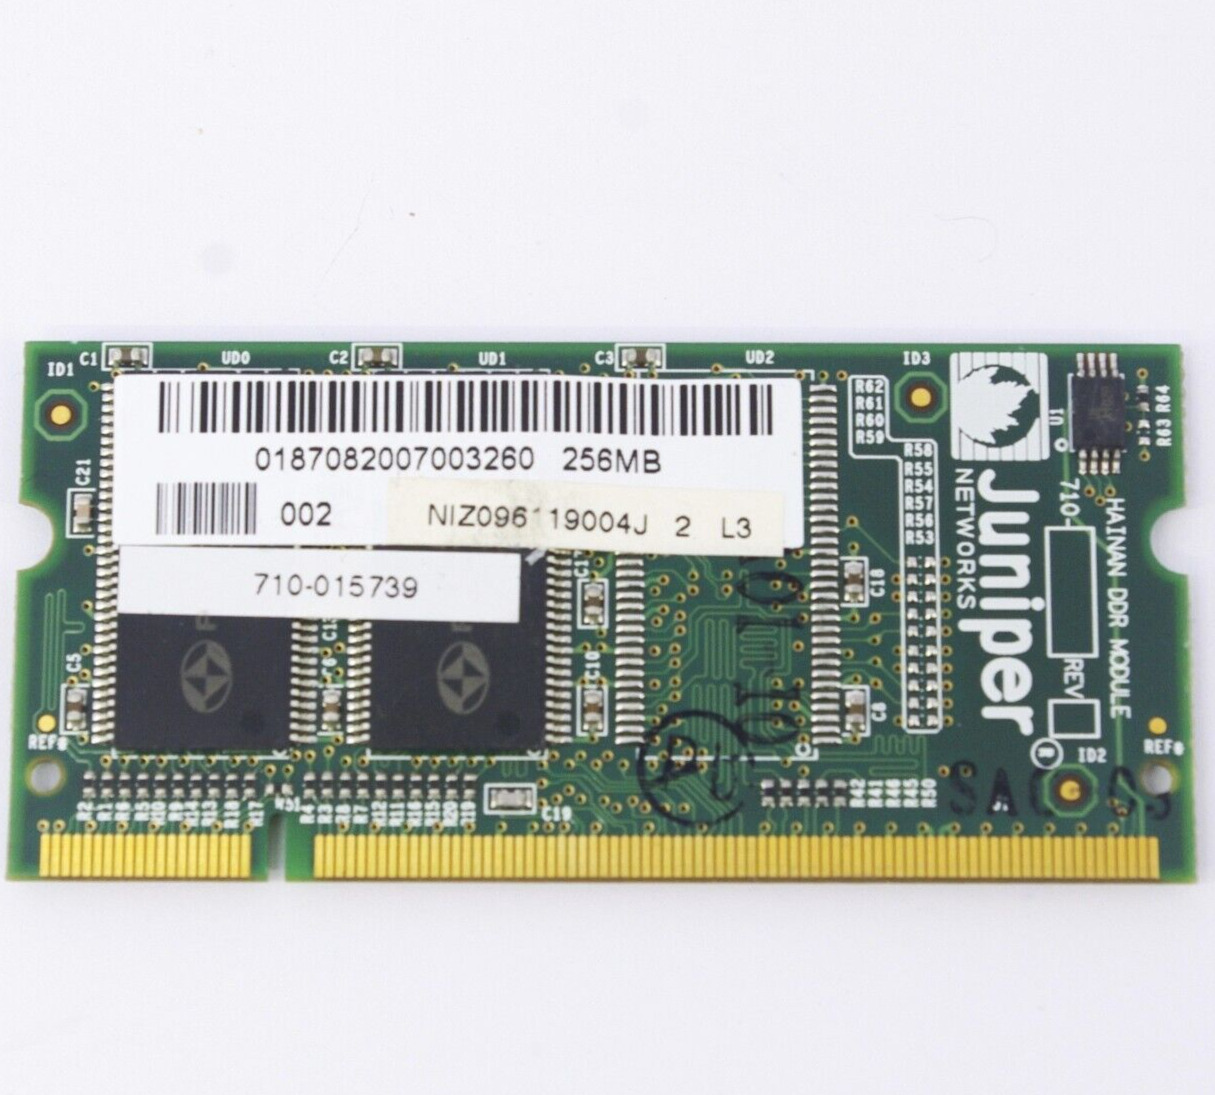 Juniper Networks 256MG Memory RAM upgrade SSG5 | SSG20 701-015739 niz096119004j